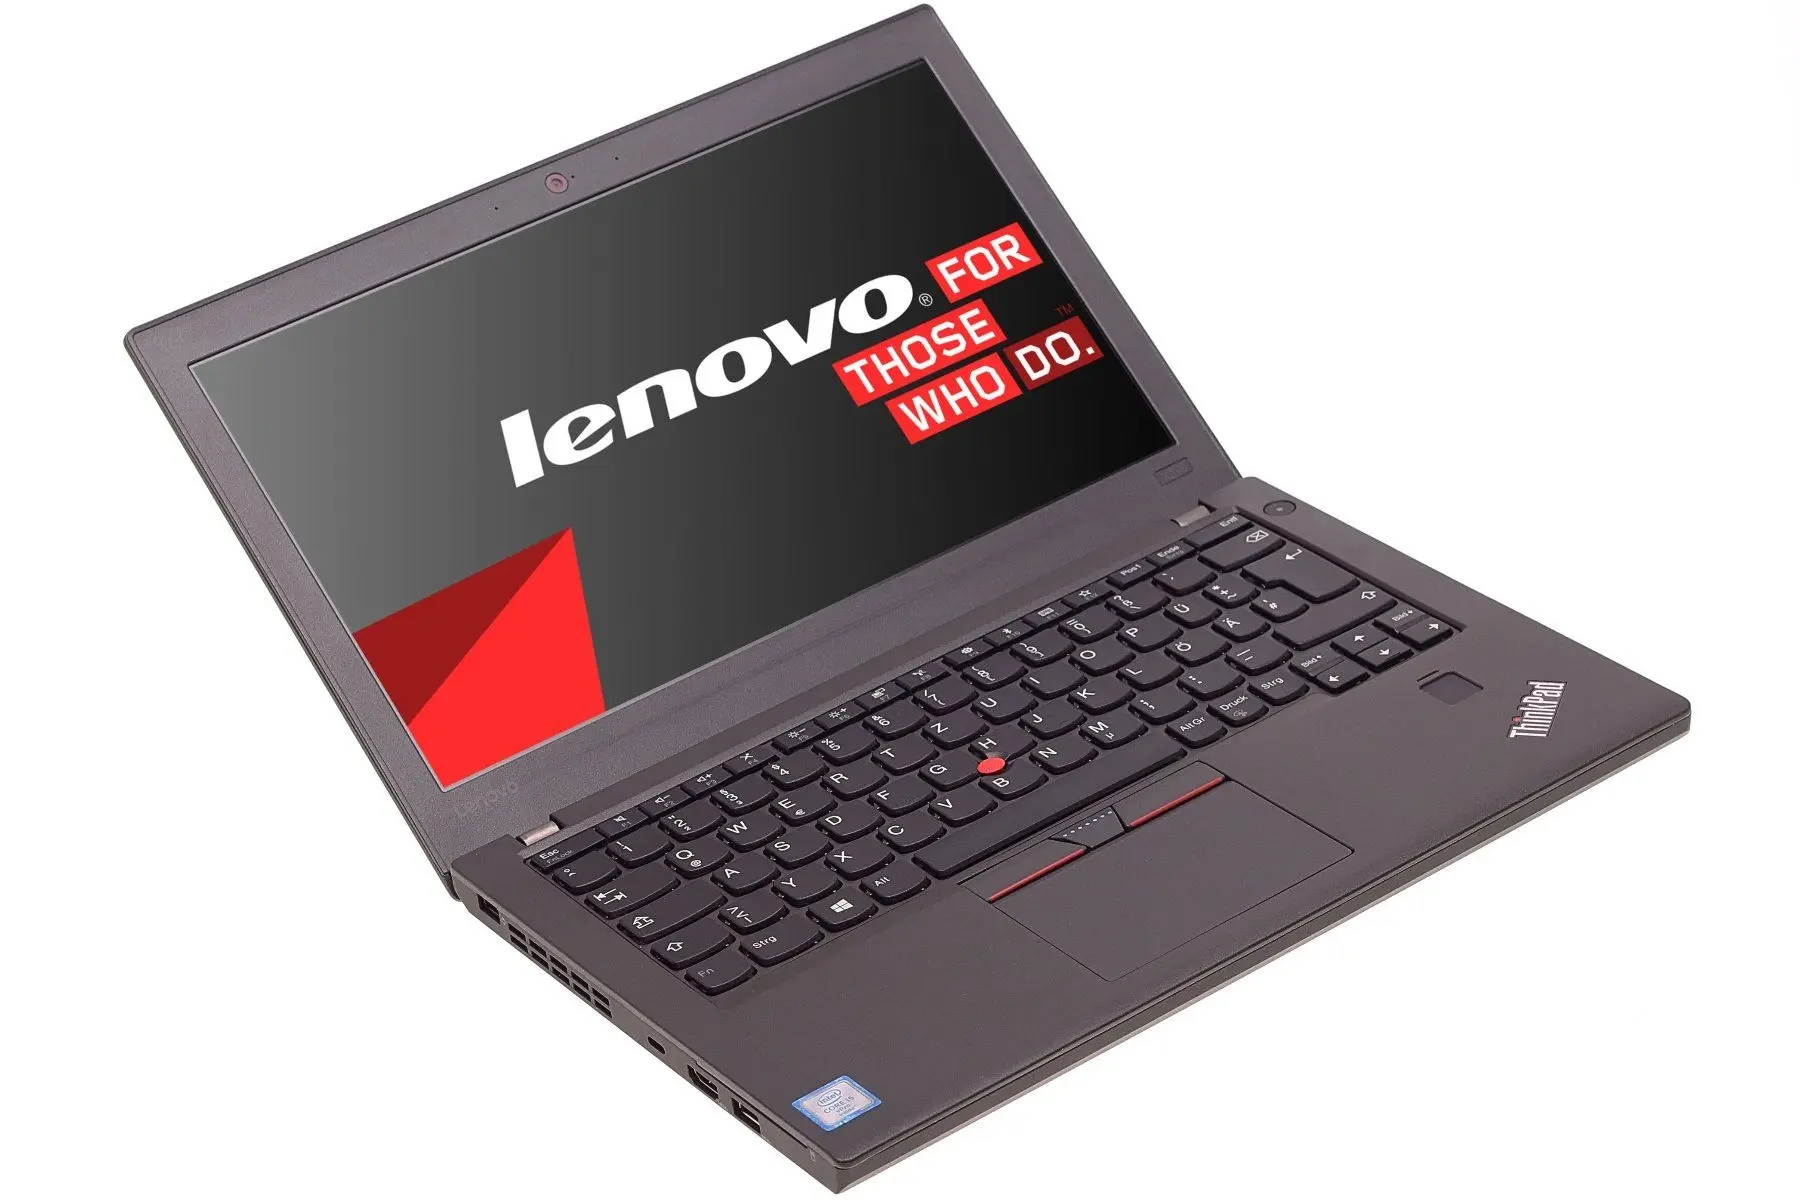 Lenovo ThinkPad X270, i7 (7. Gen), 12.5 Zoll Full-HD IPS, 8GB, 250GB NVMe SSD, Webcam, beleuchtete Tastatur, Windows 10 Pro (7. Gen)